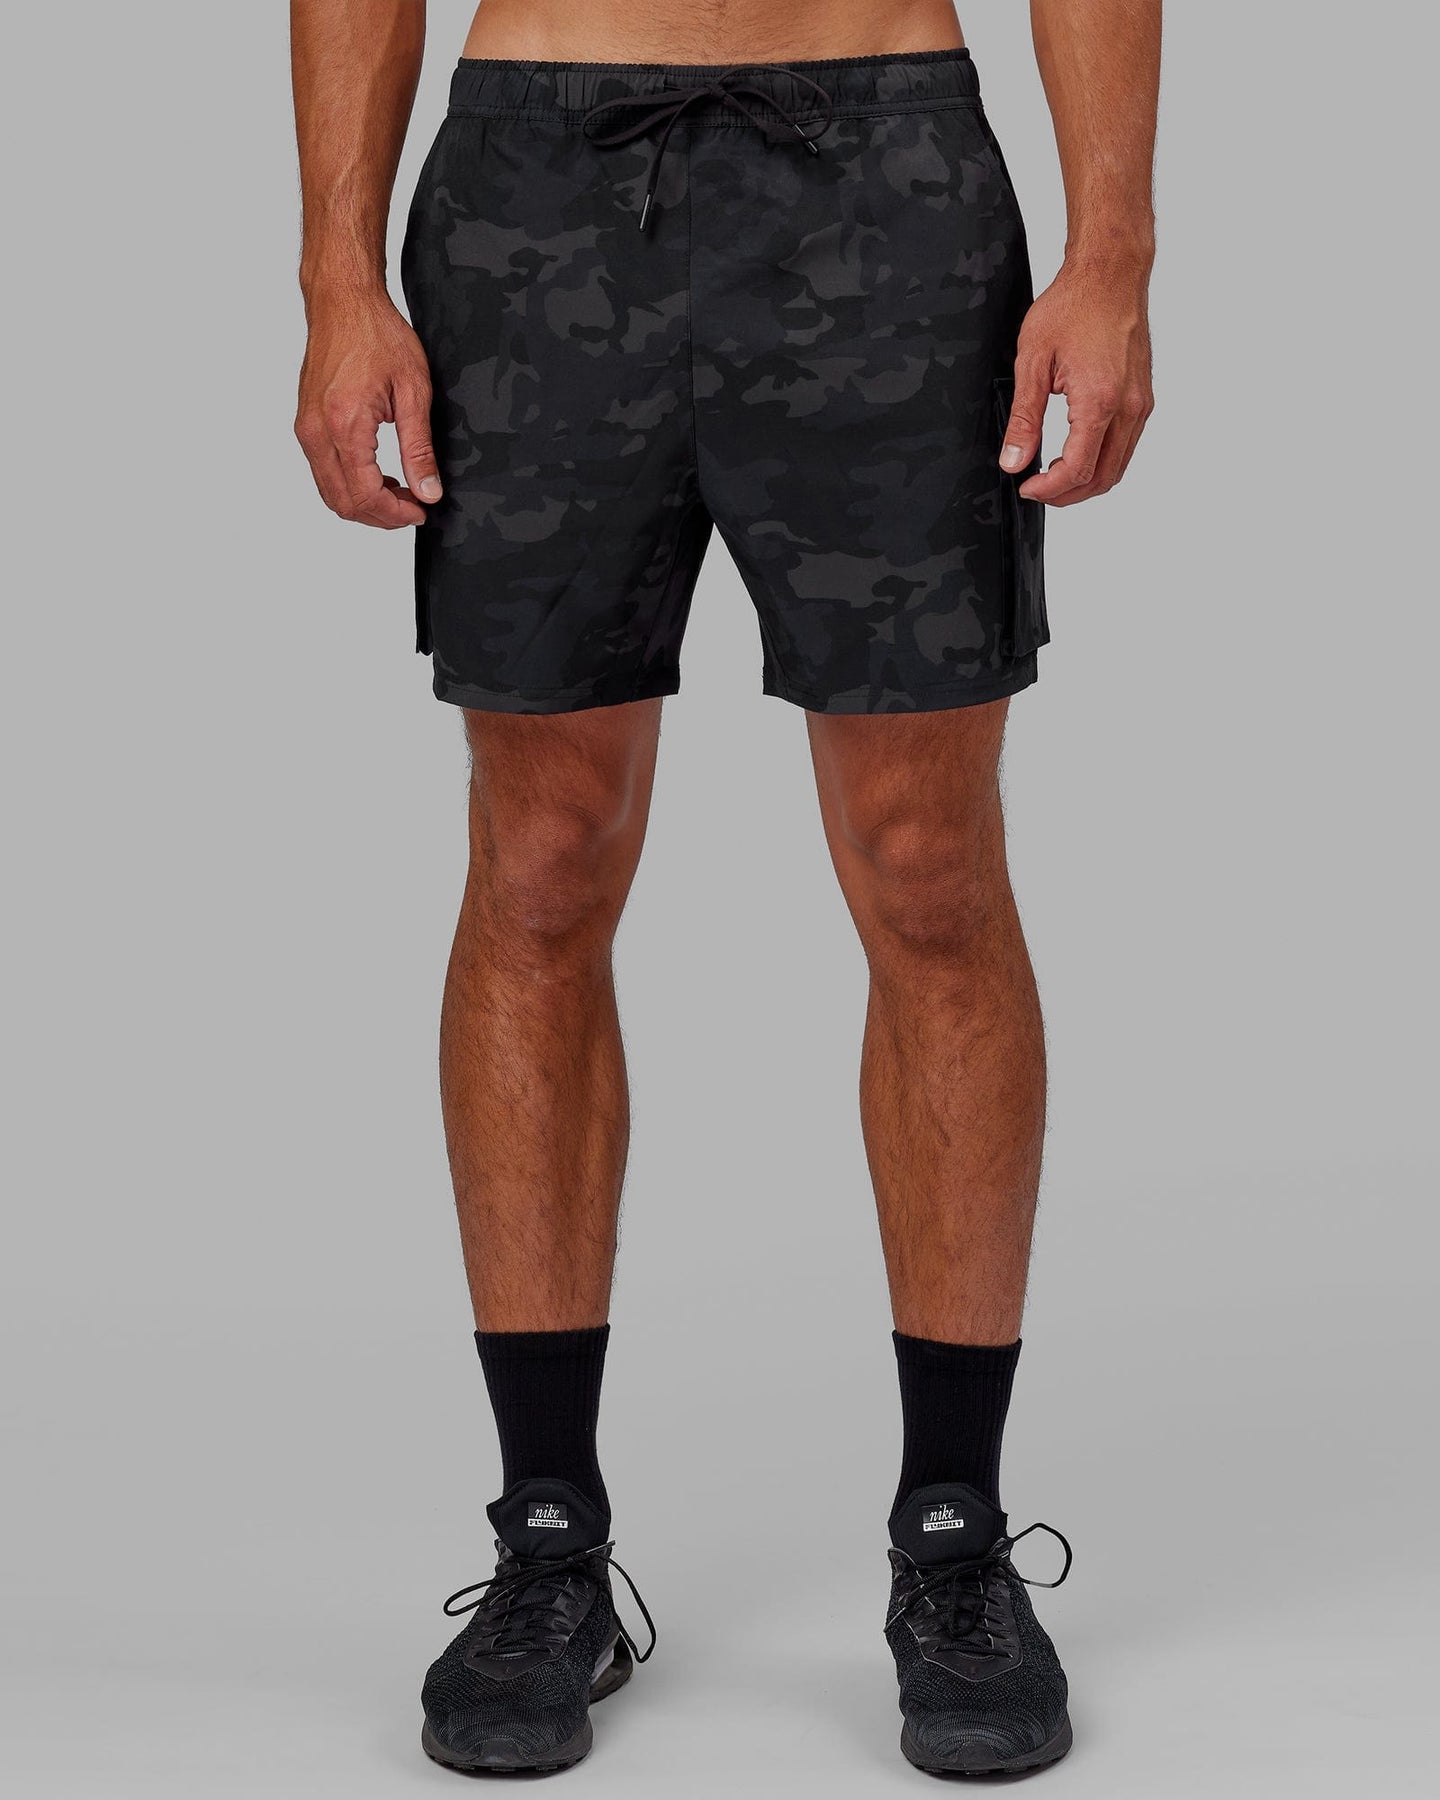 Long Island Strong Mens Sweat shorts (Black Camo)